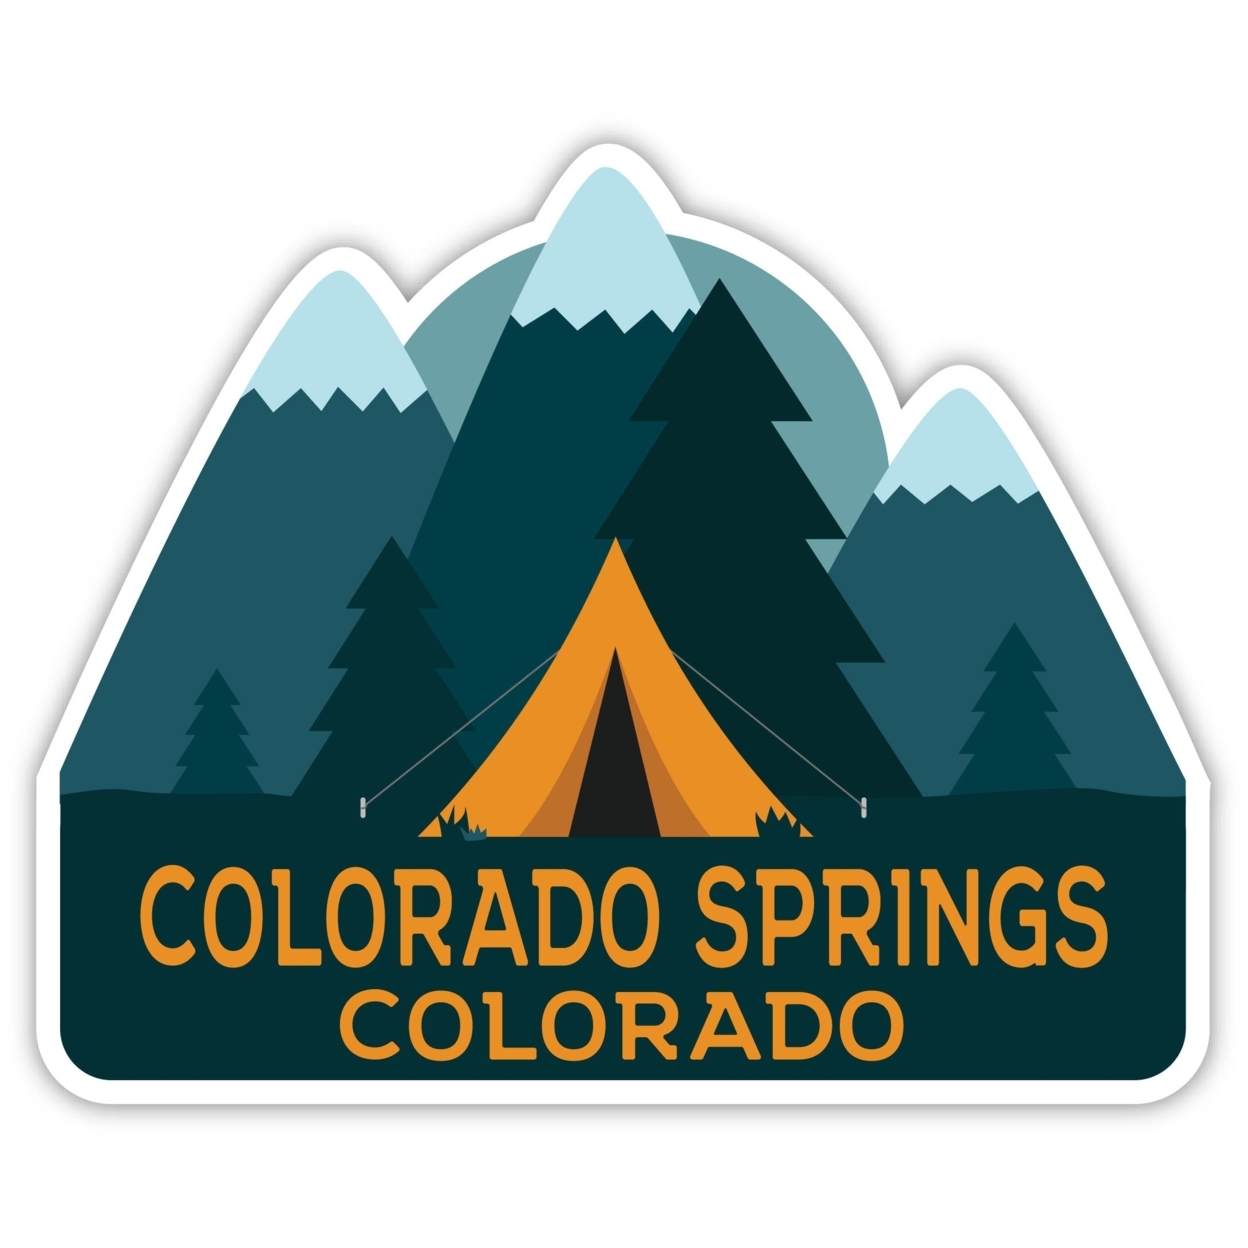 Colorado Springs Colorado Souvenir Decorative Stickers (Choose Theme And Size) - 4-Pack, 6-Inch, Bear